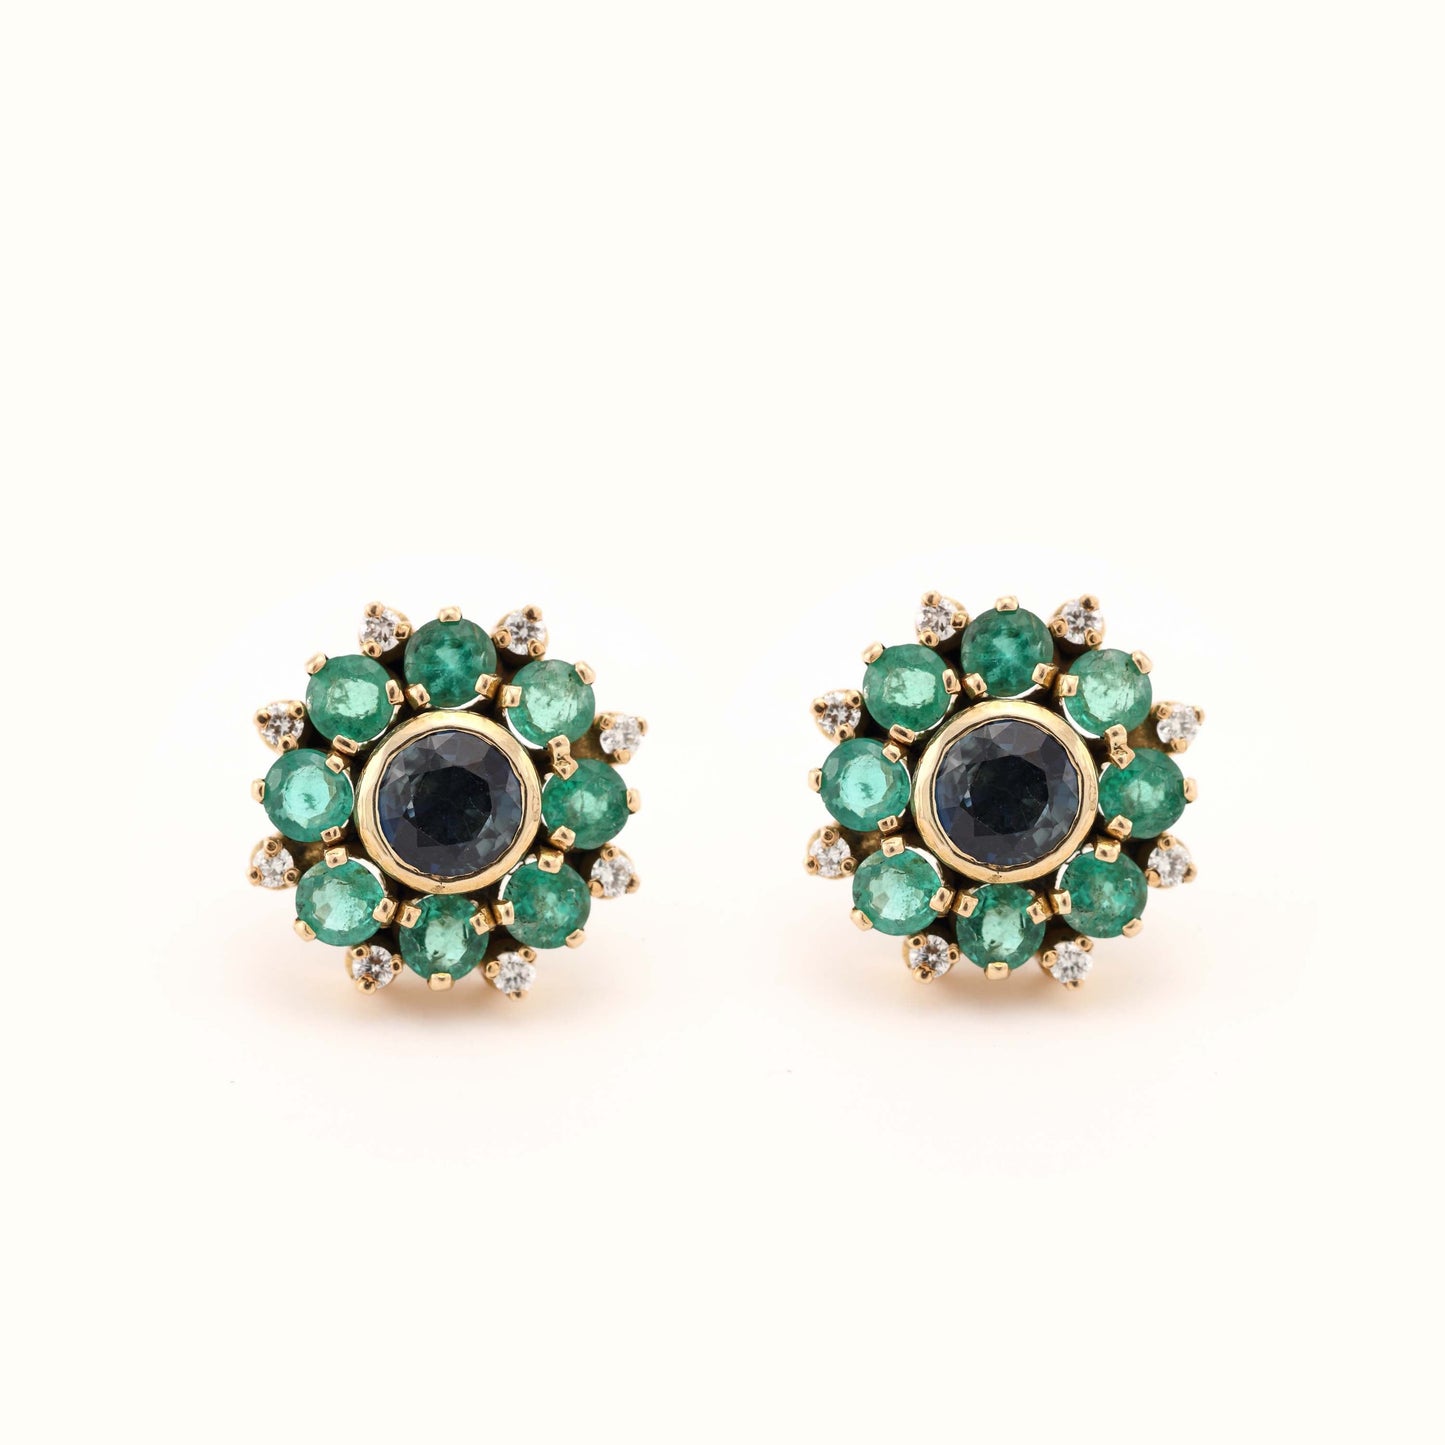 The Gautami Gold, Diamond, Emerald and Blue Sapphire Ear Studs by Rasvihar